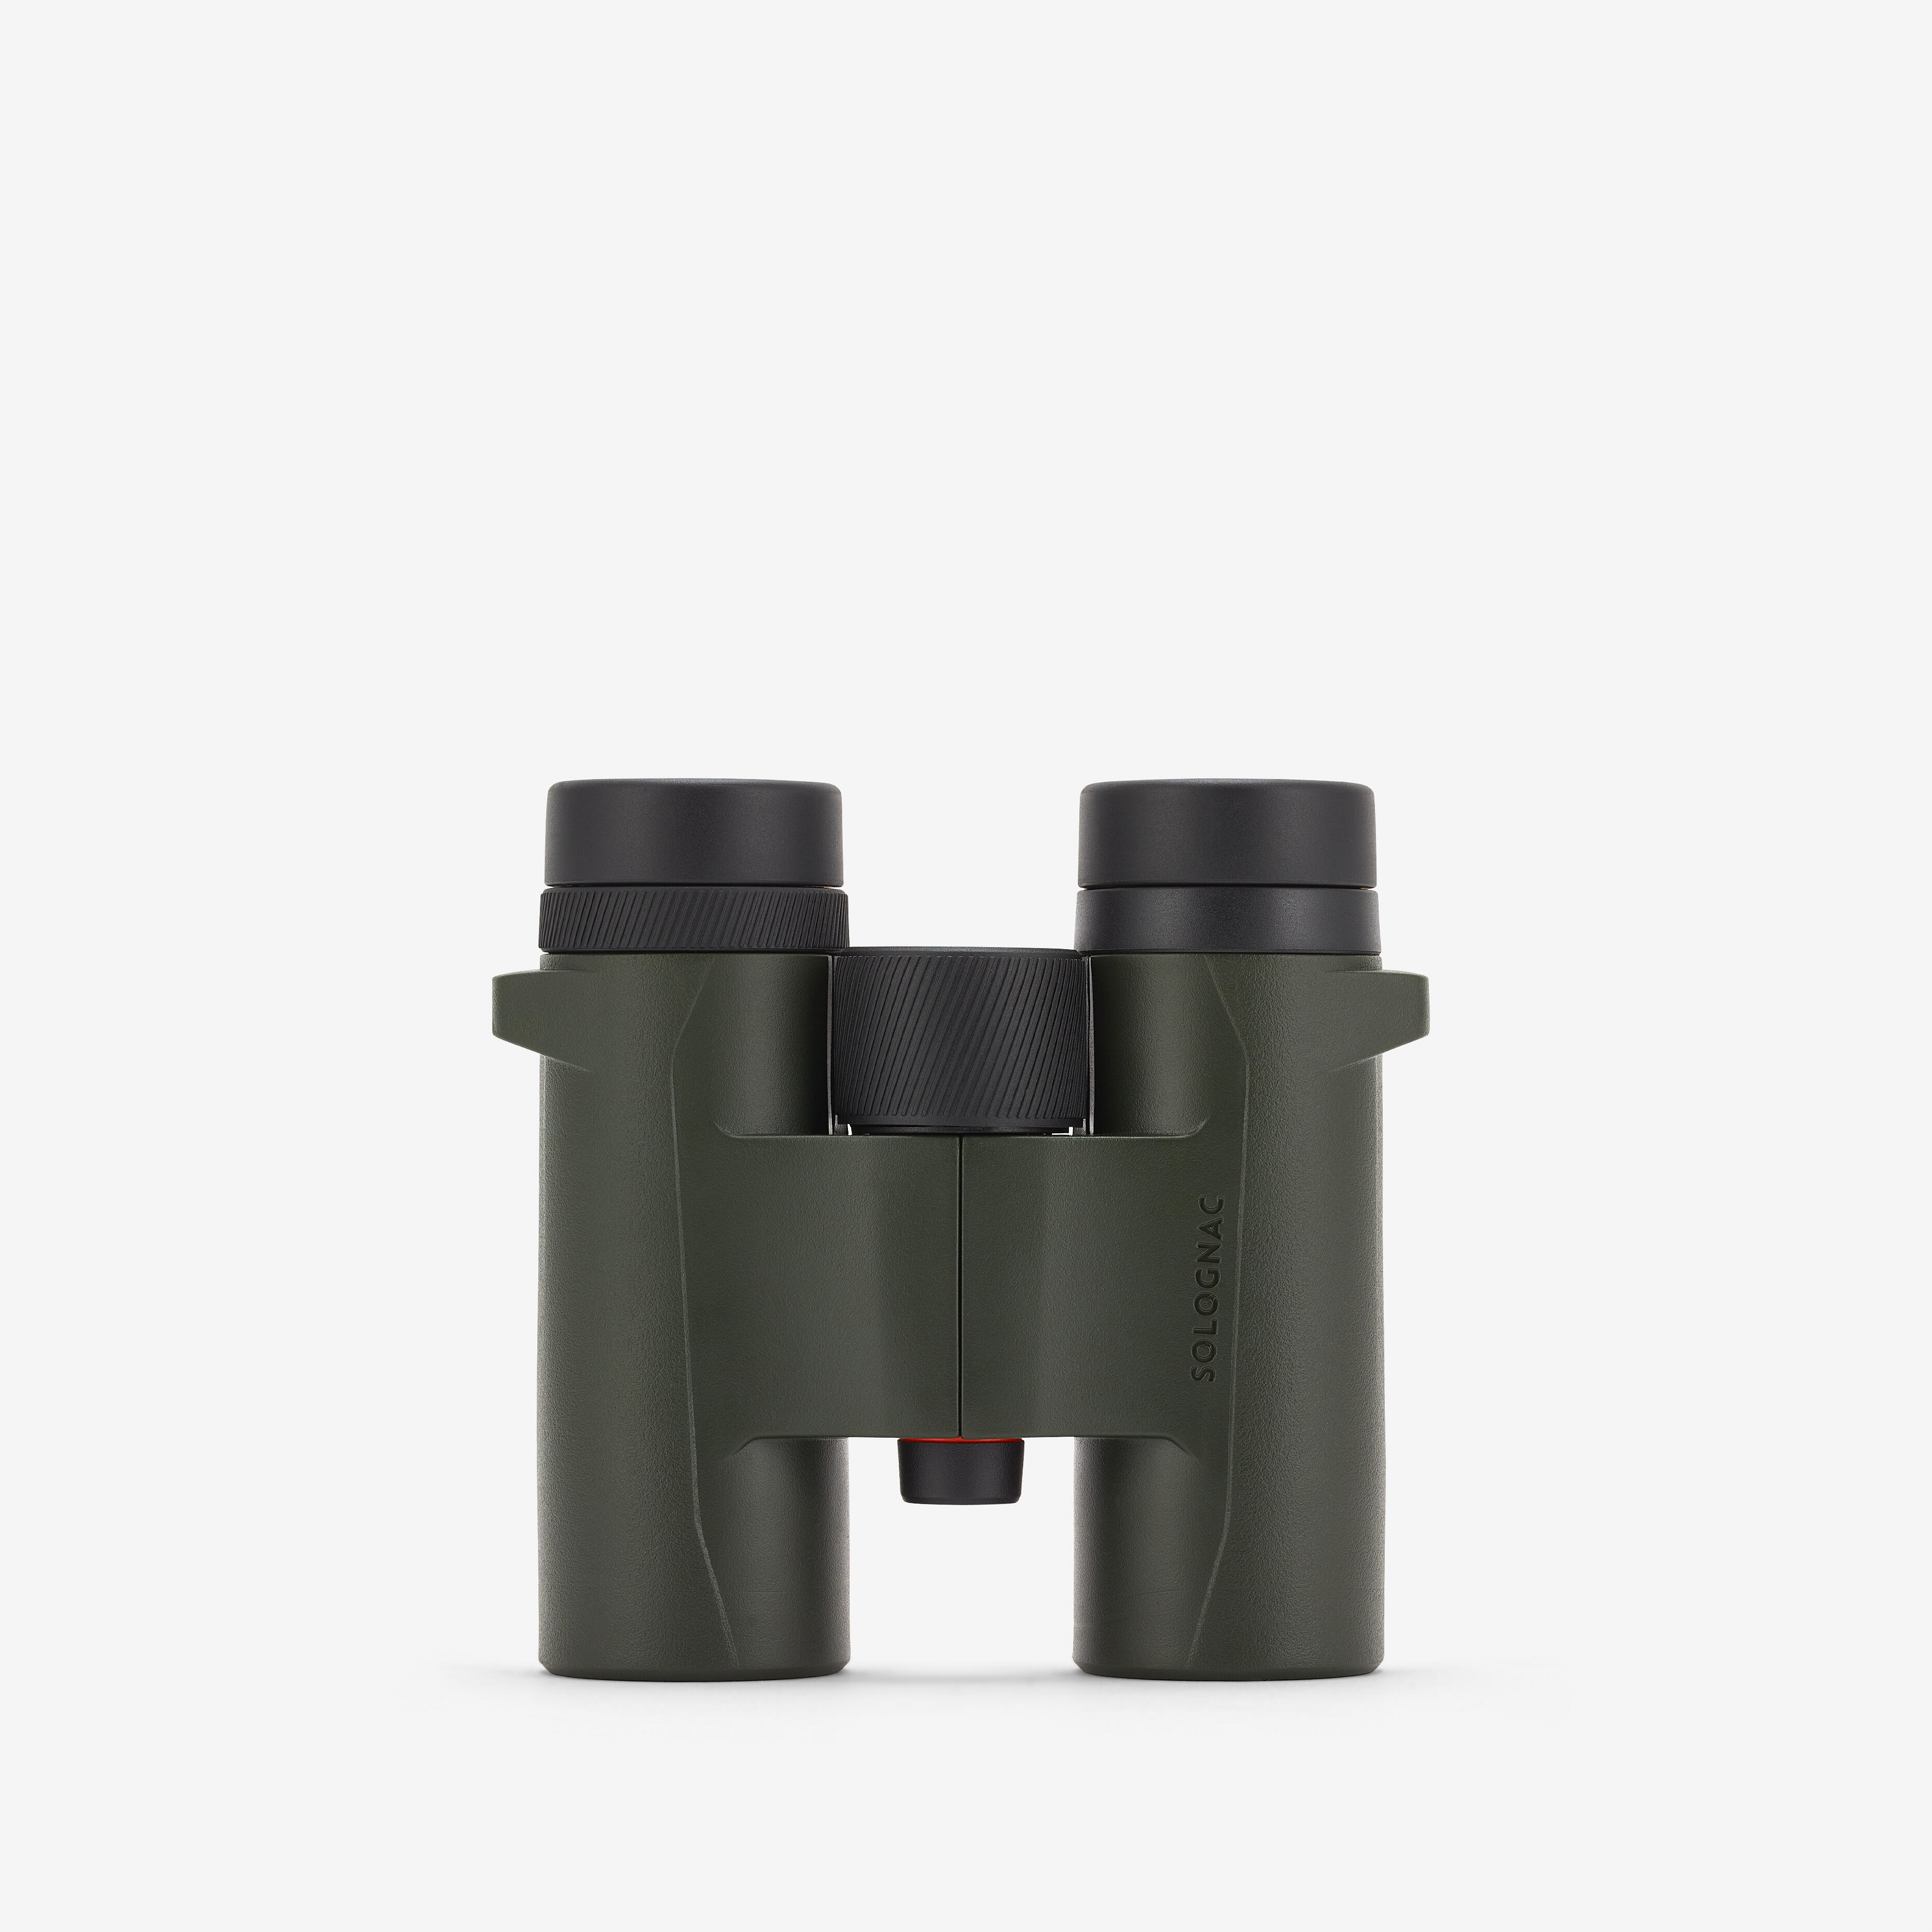 500 hunting binoculars